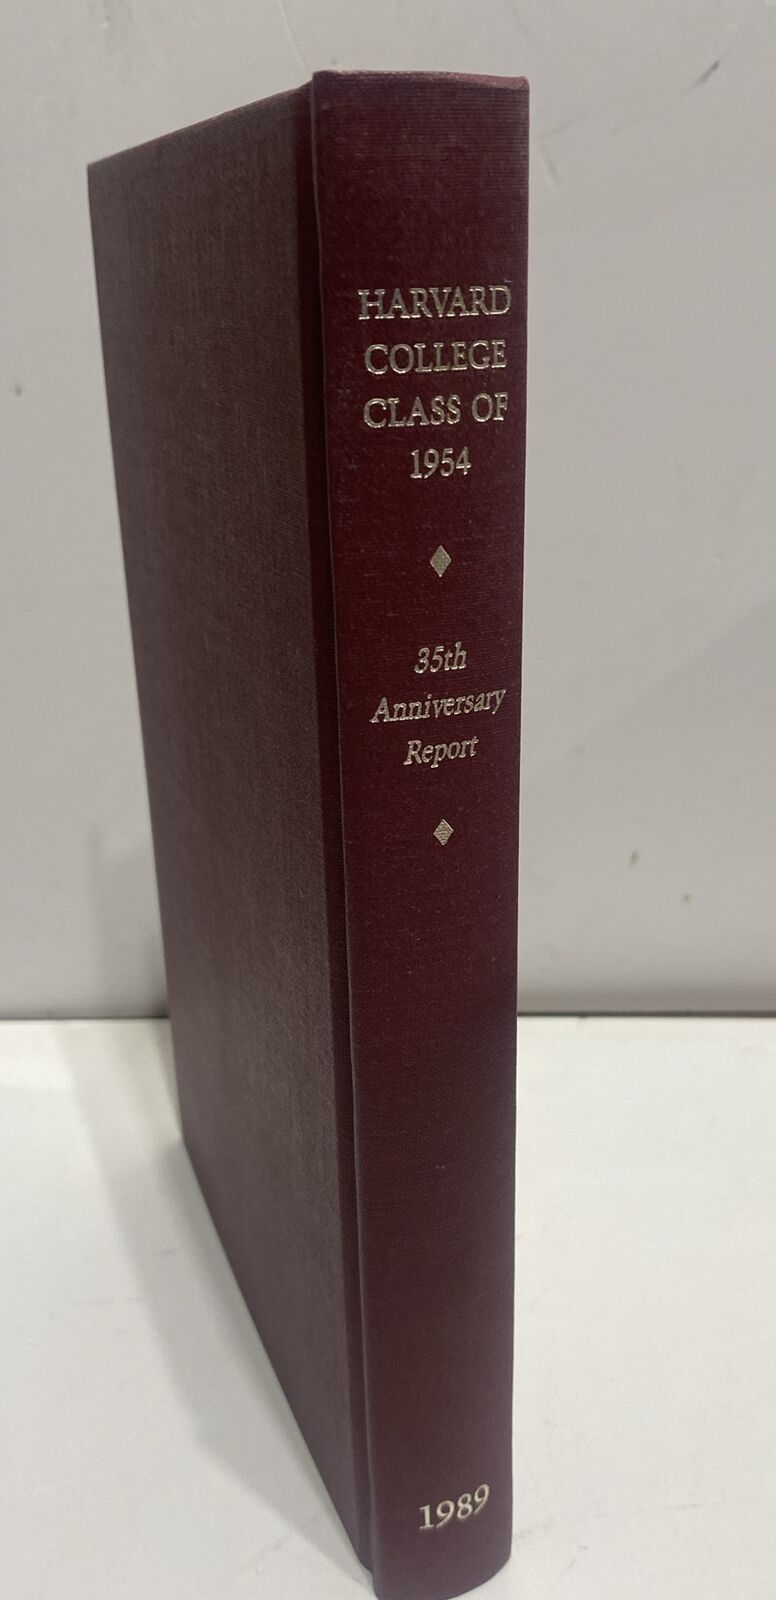 HARVARD COLLEGE CLASS OF 1955 - 35TH ANNIVERSARY REPORT